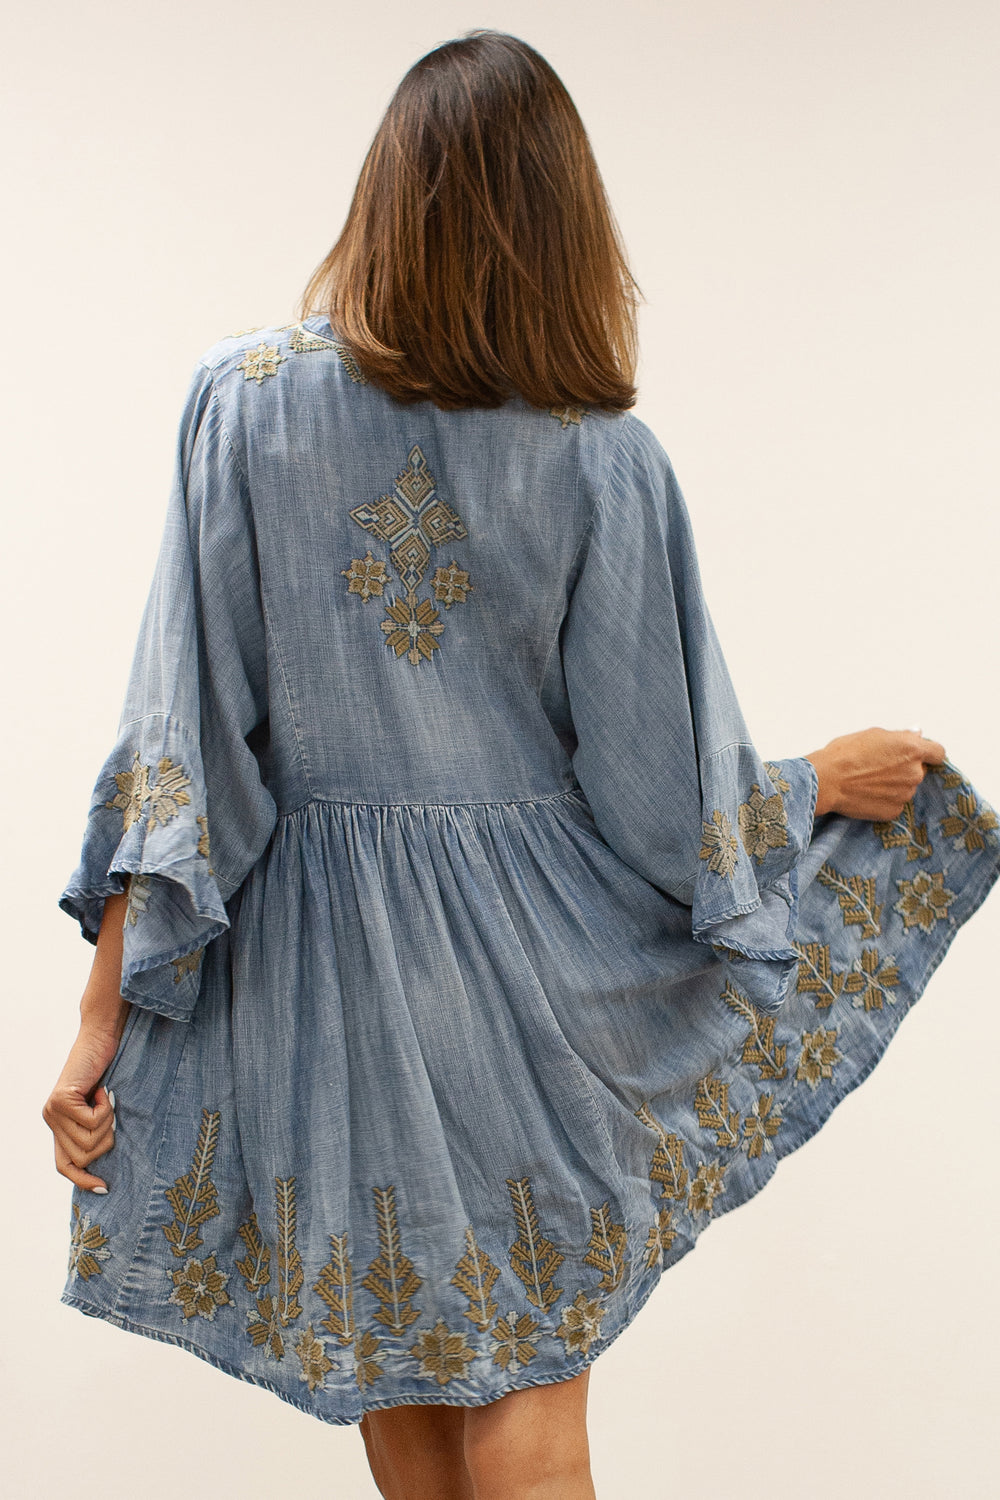 Kyla Seo Rue dress, embroidered tencel